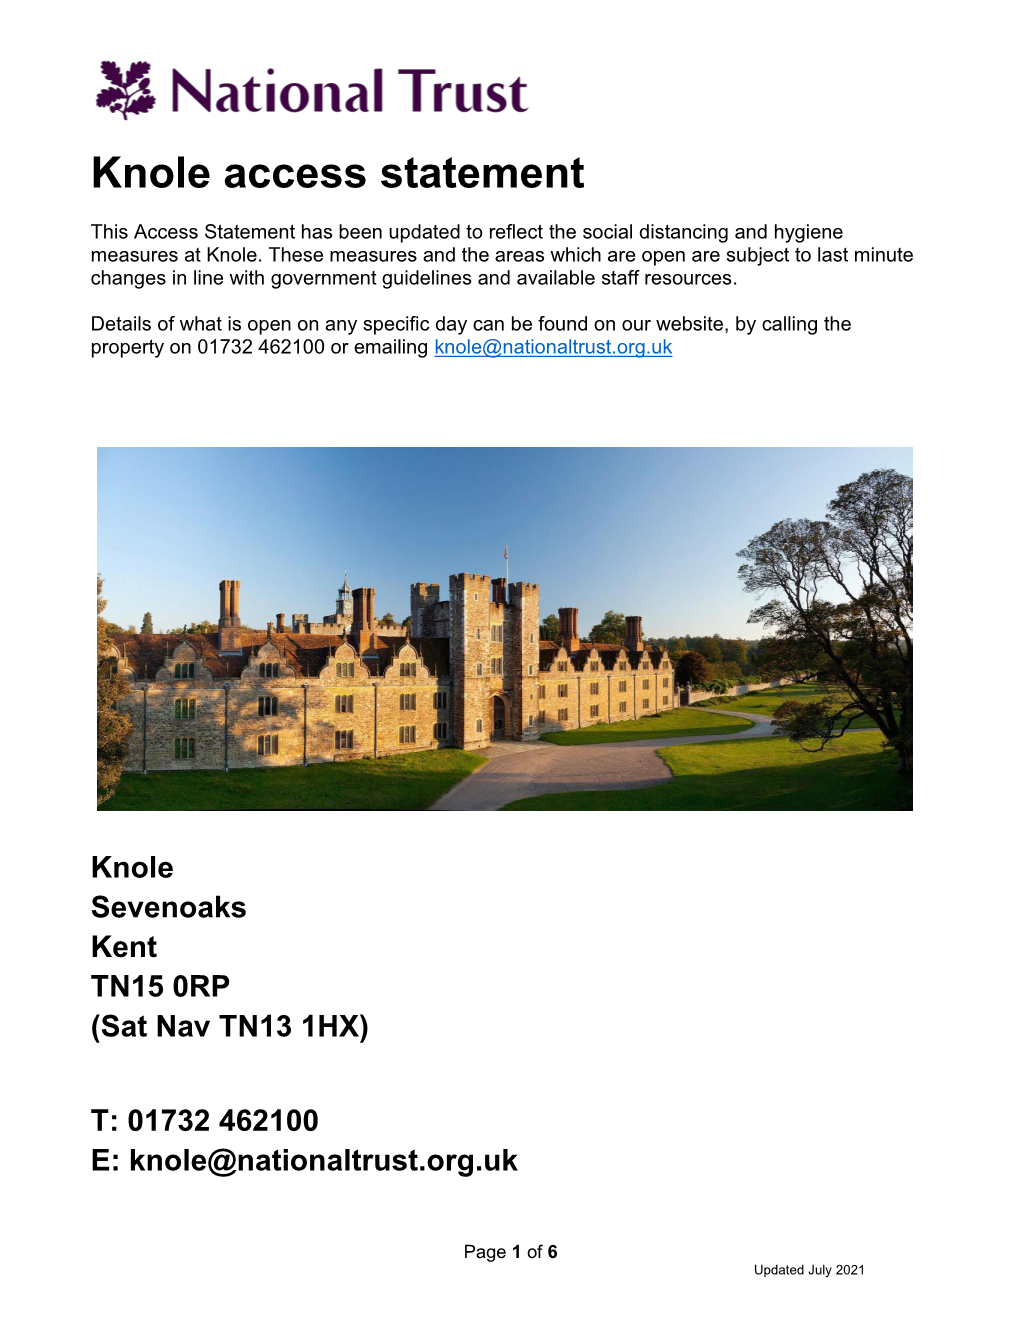 Knole Access Statement